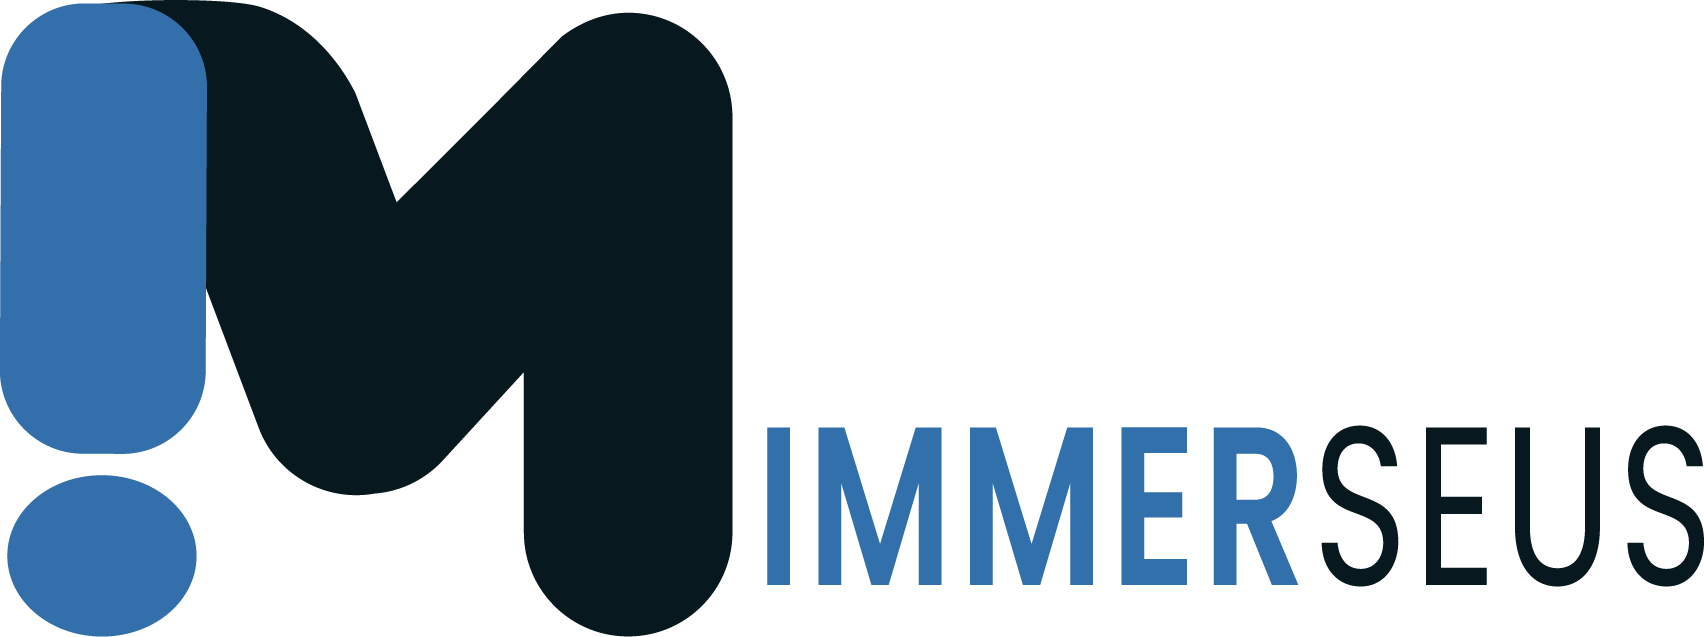 Immerseus logo